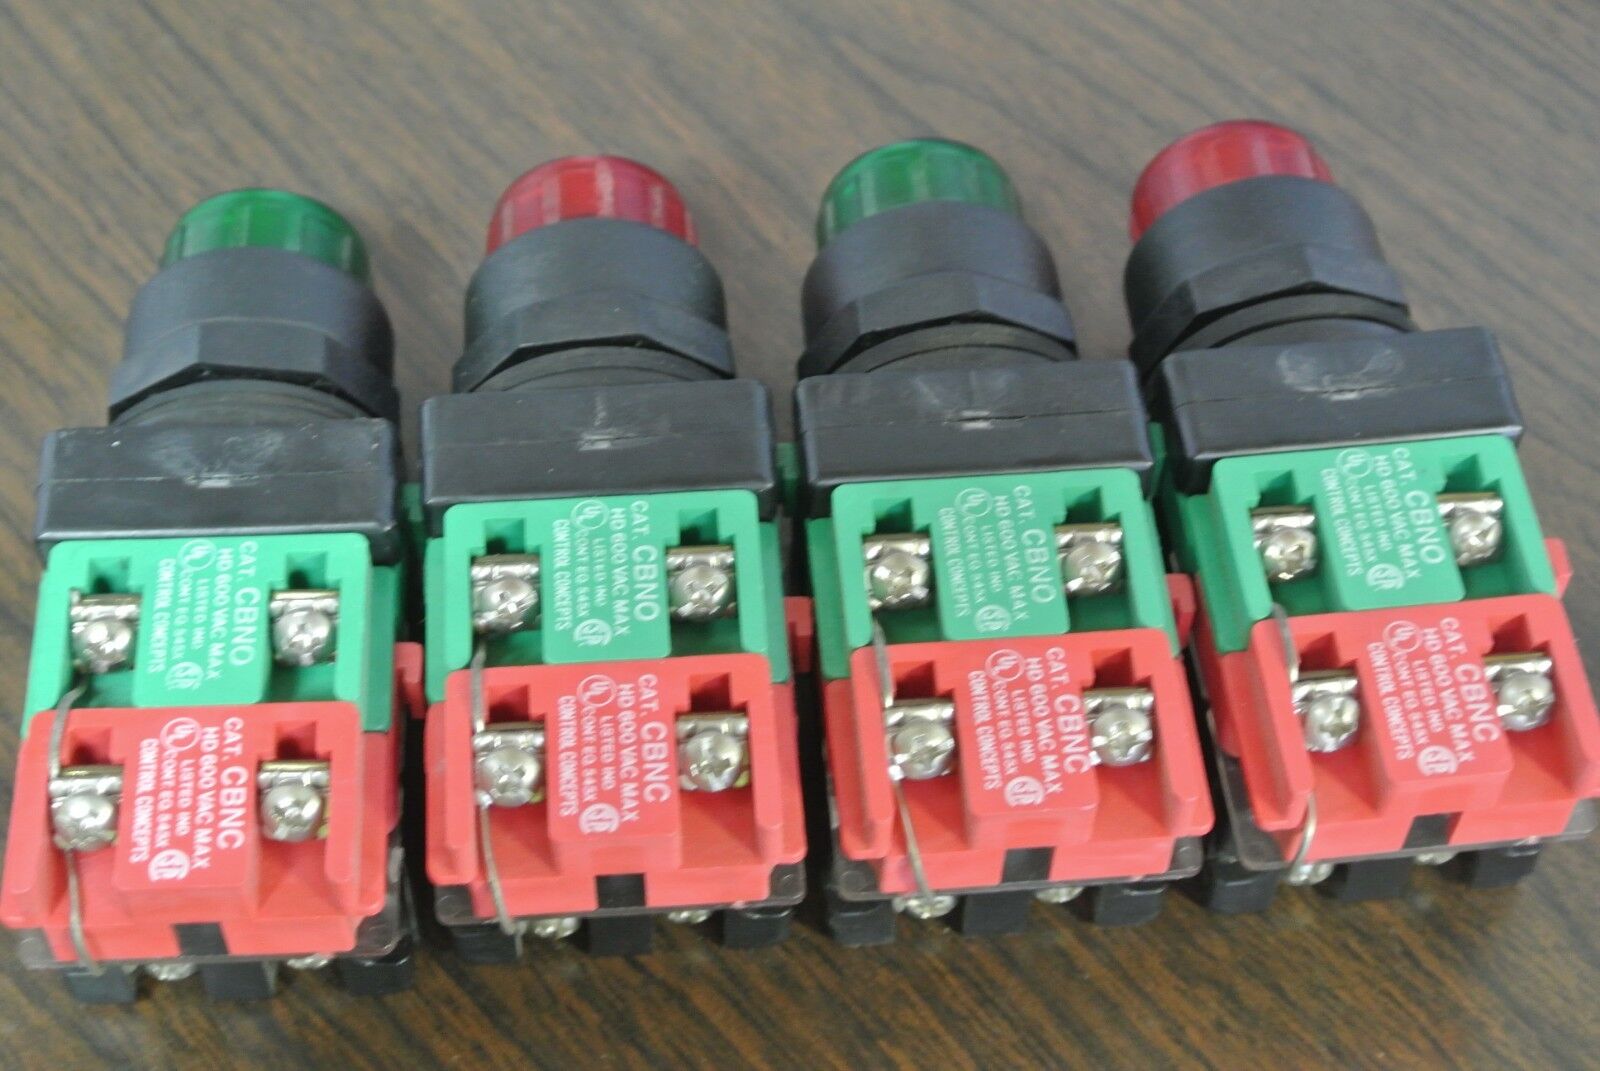 CONTROL CONCEPTS TFLU120 - LOT of 4 TRANSFORMER LIGHTS - 120V - 2 GREEN, 2 RED Unbranded - фотография #6